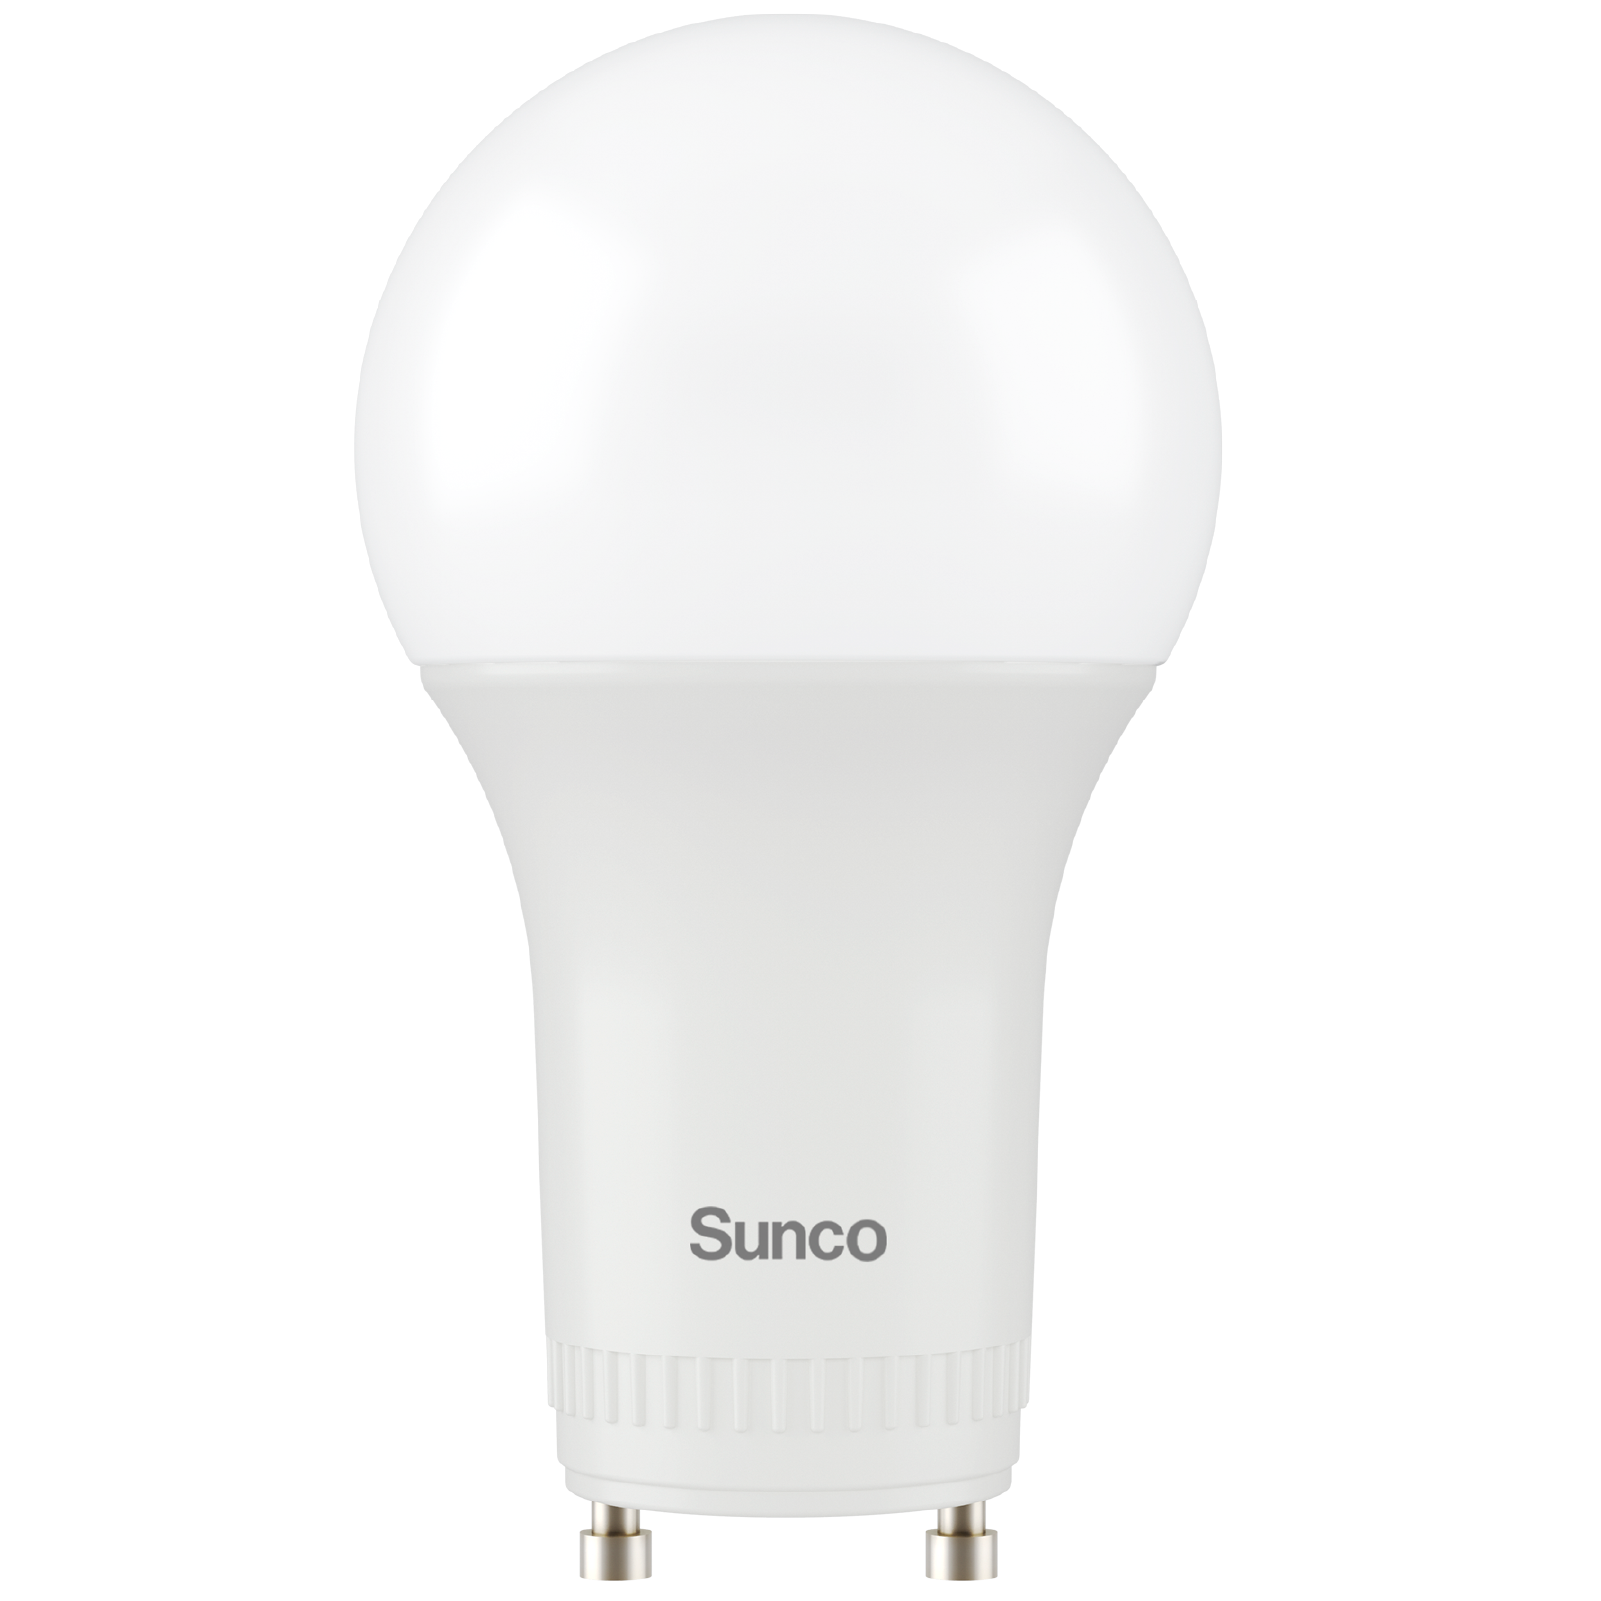 A19 GU24 LED BULBS LED LIGHTING SUNCO – Sunco Lighting